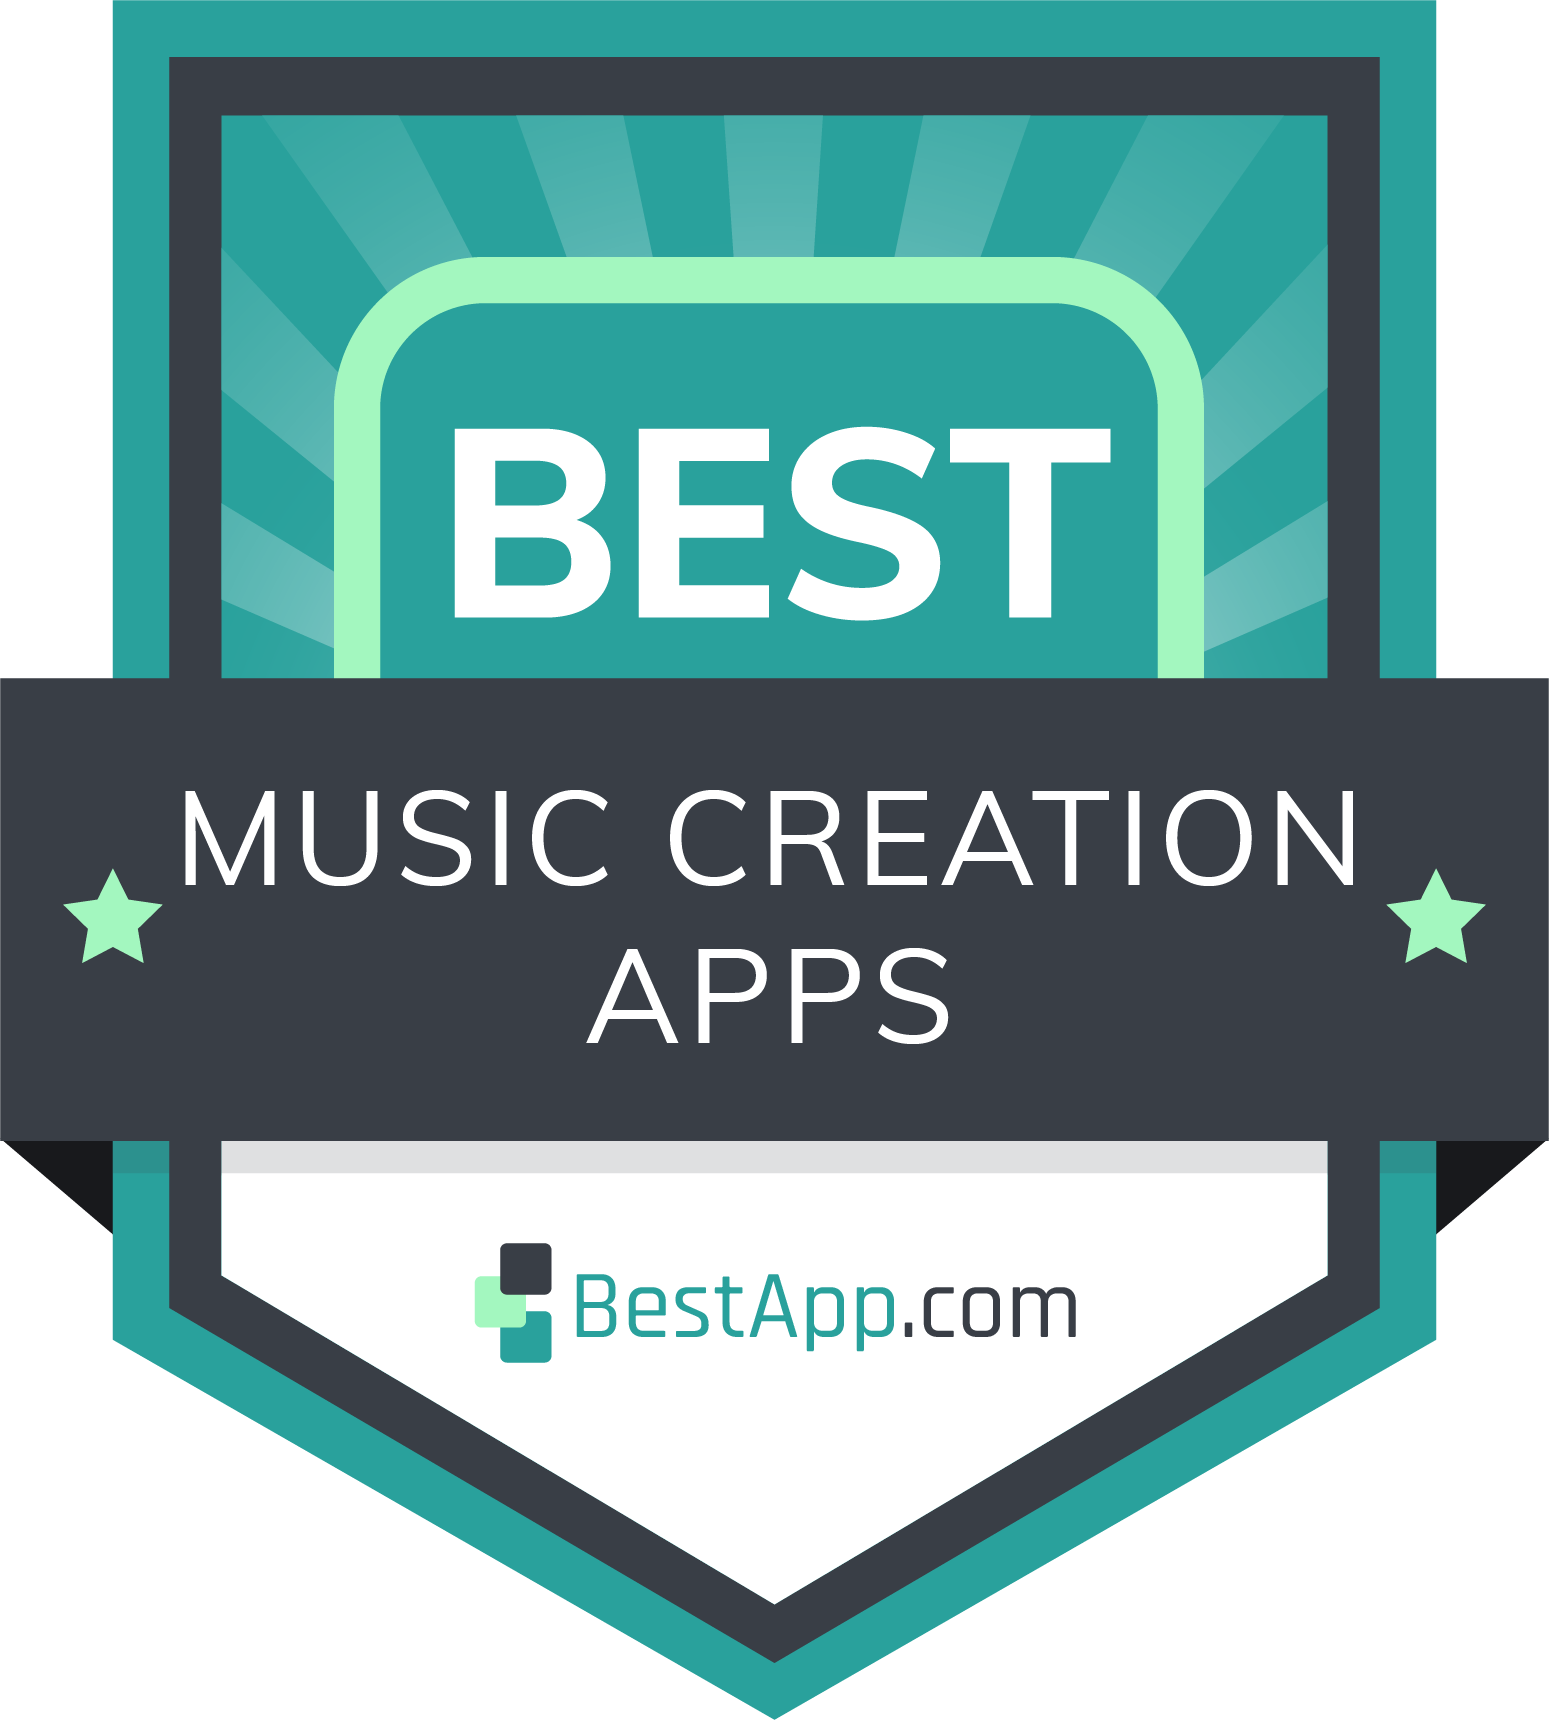 Best Music Creation Apps Badge